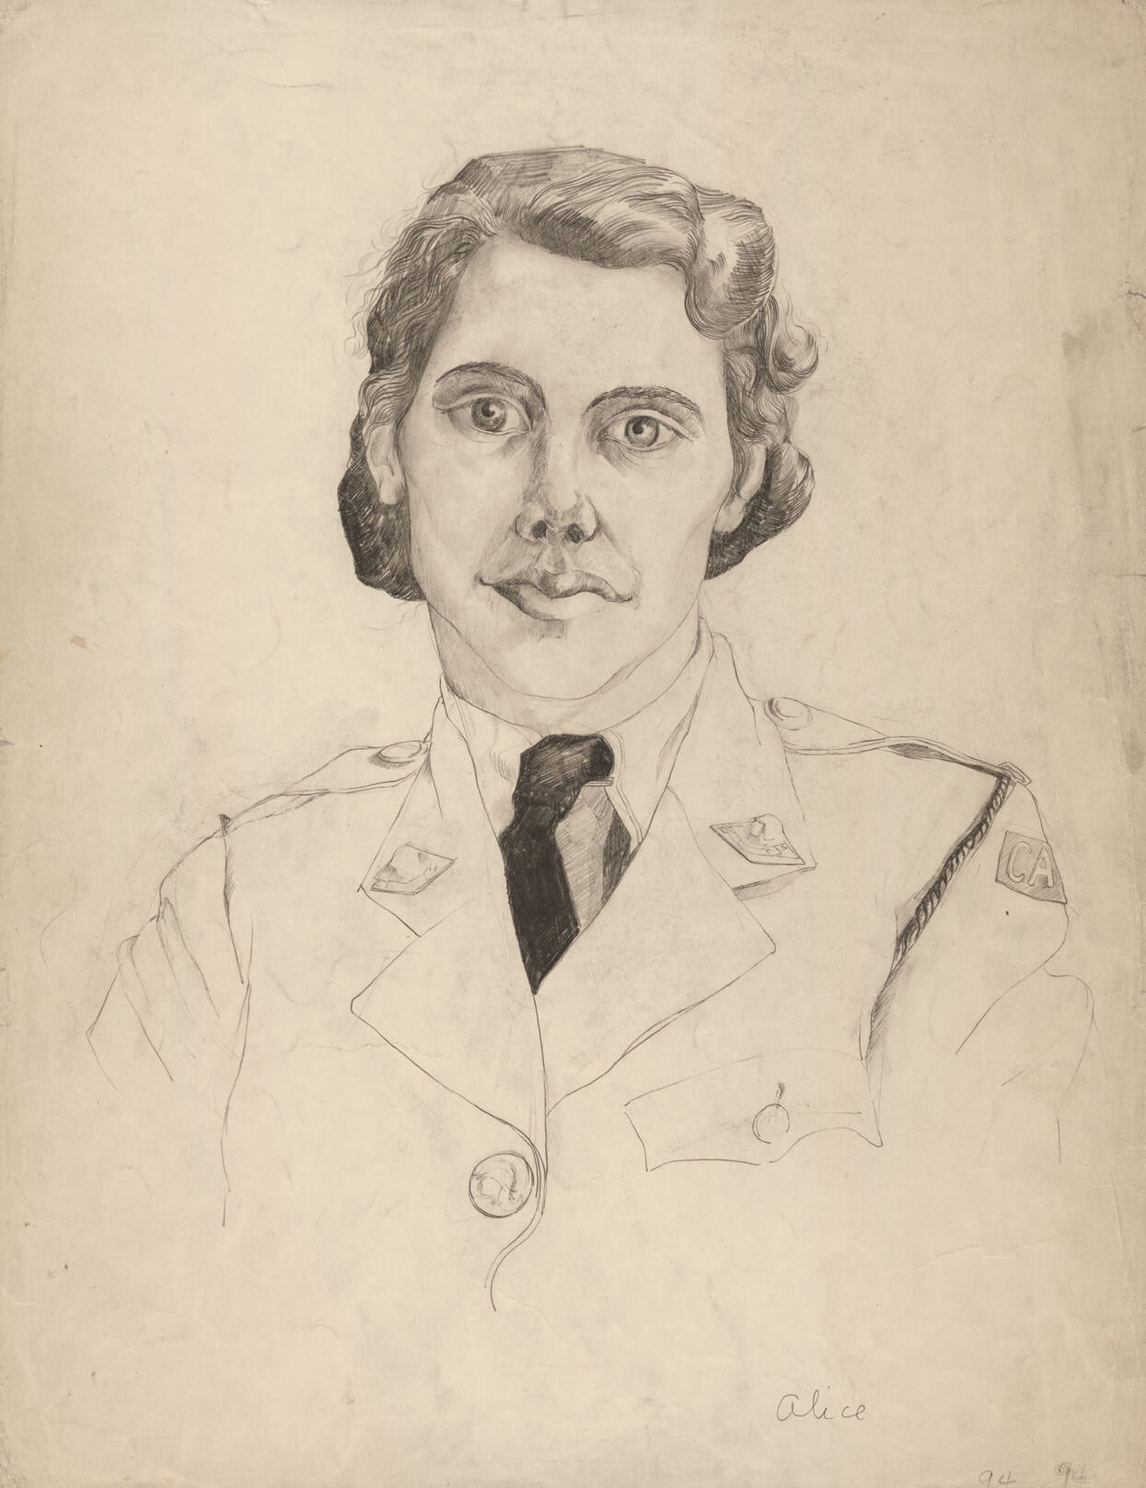 « Alice », 1943, illustration tirée de W110278: The Personal War Records of Private Lamb, M., 1942-1945